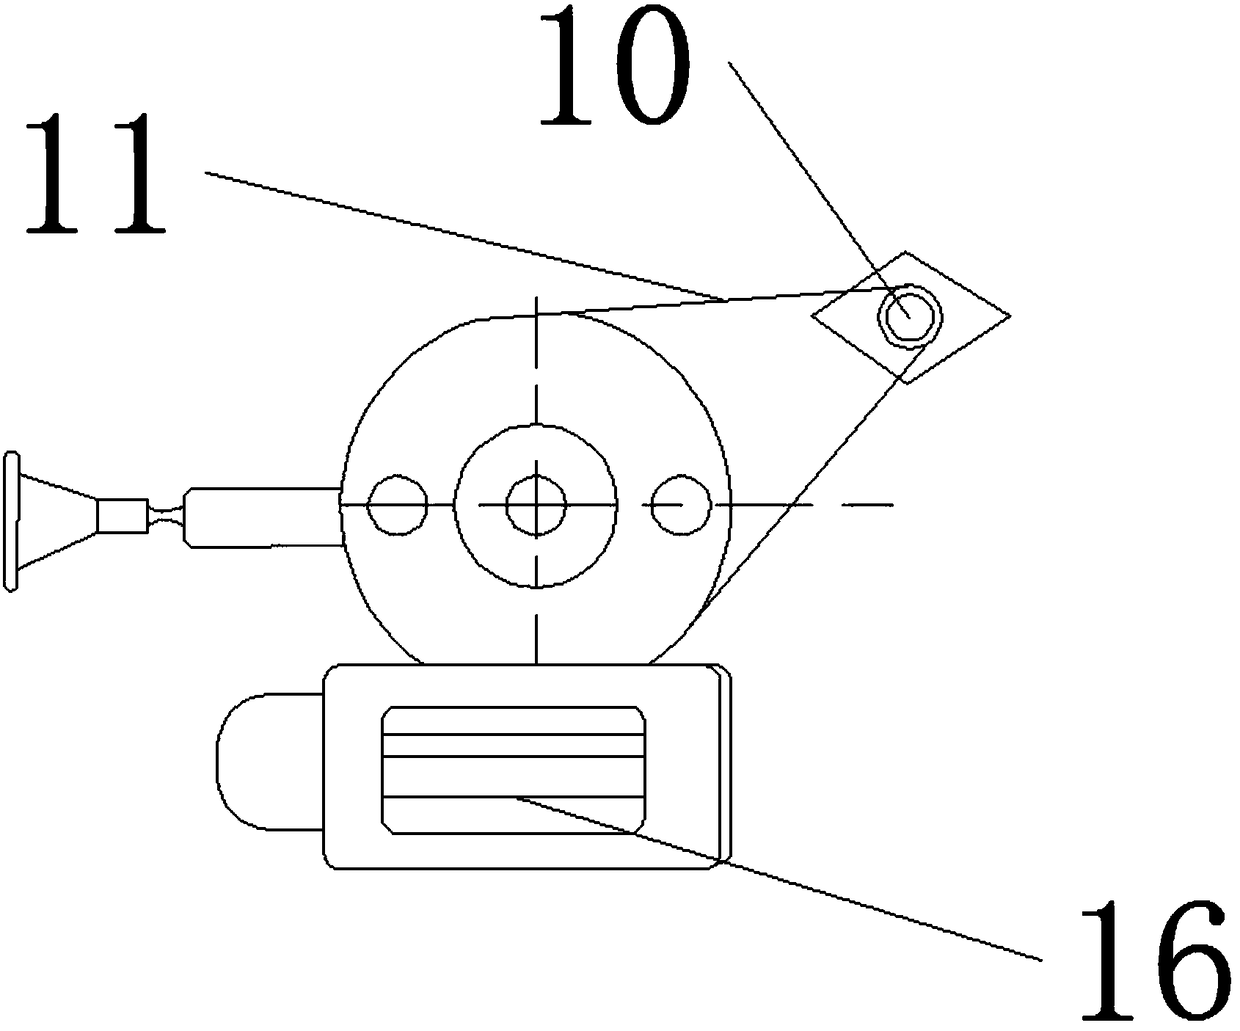 Belt regulating mechanism of fabric cutter for making socks